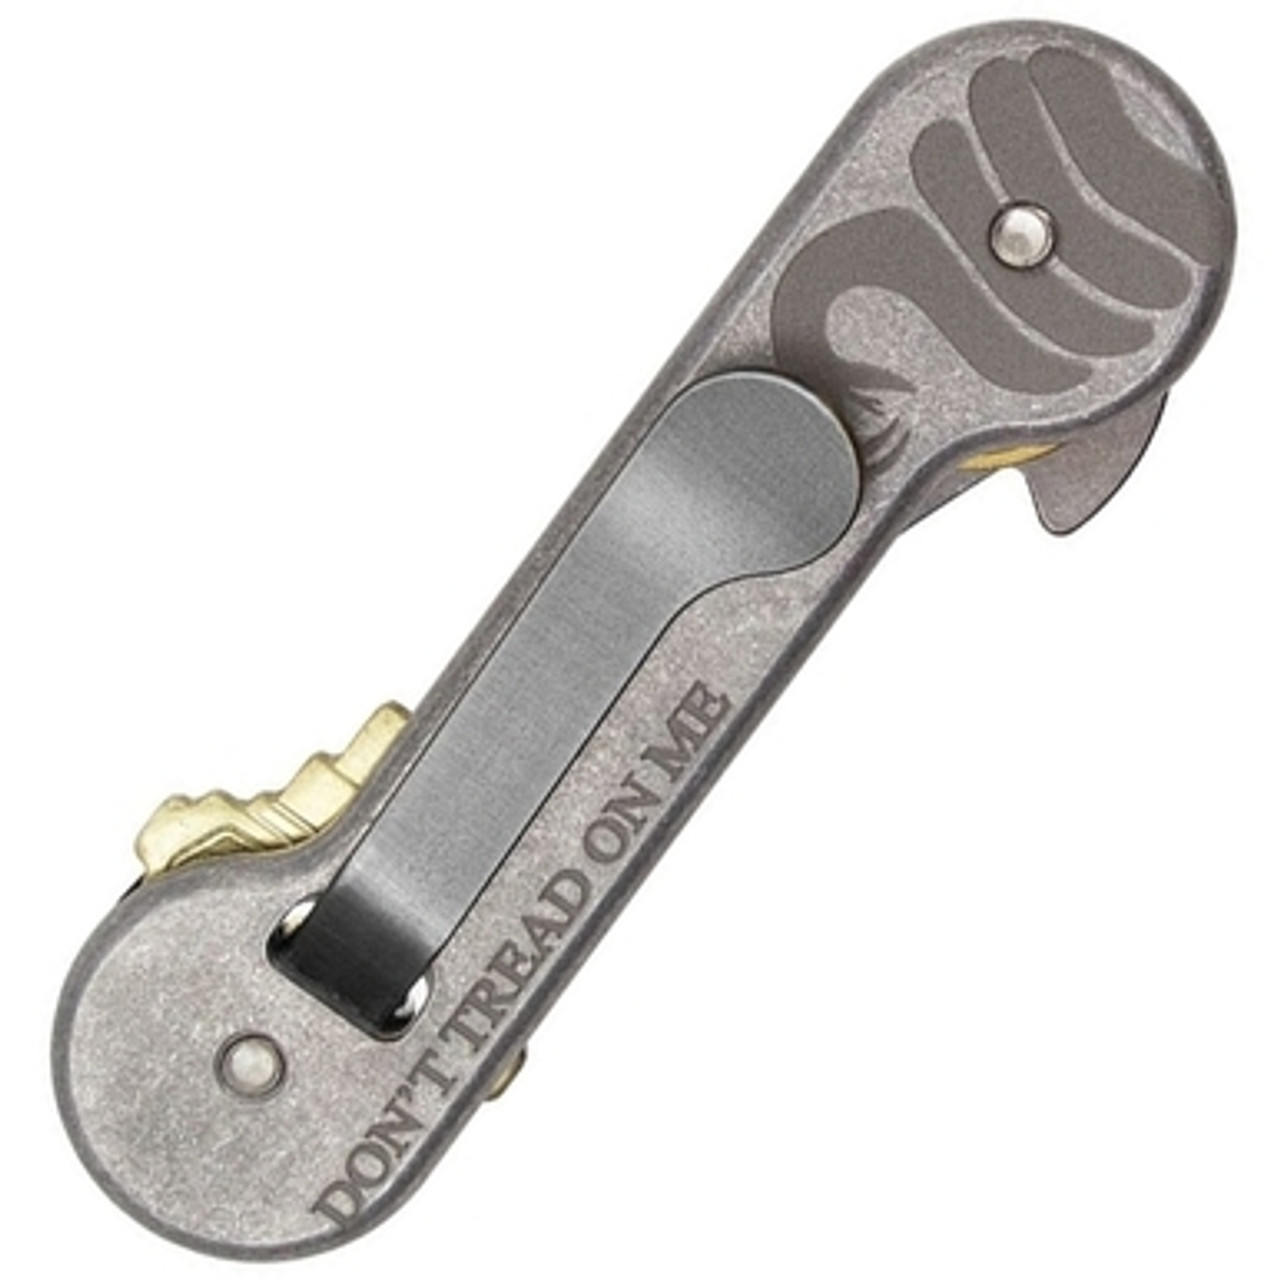 Don't Tread on Me Pocket Clip Keychain